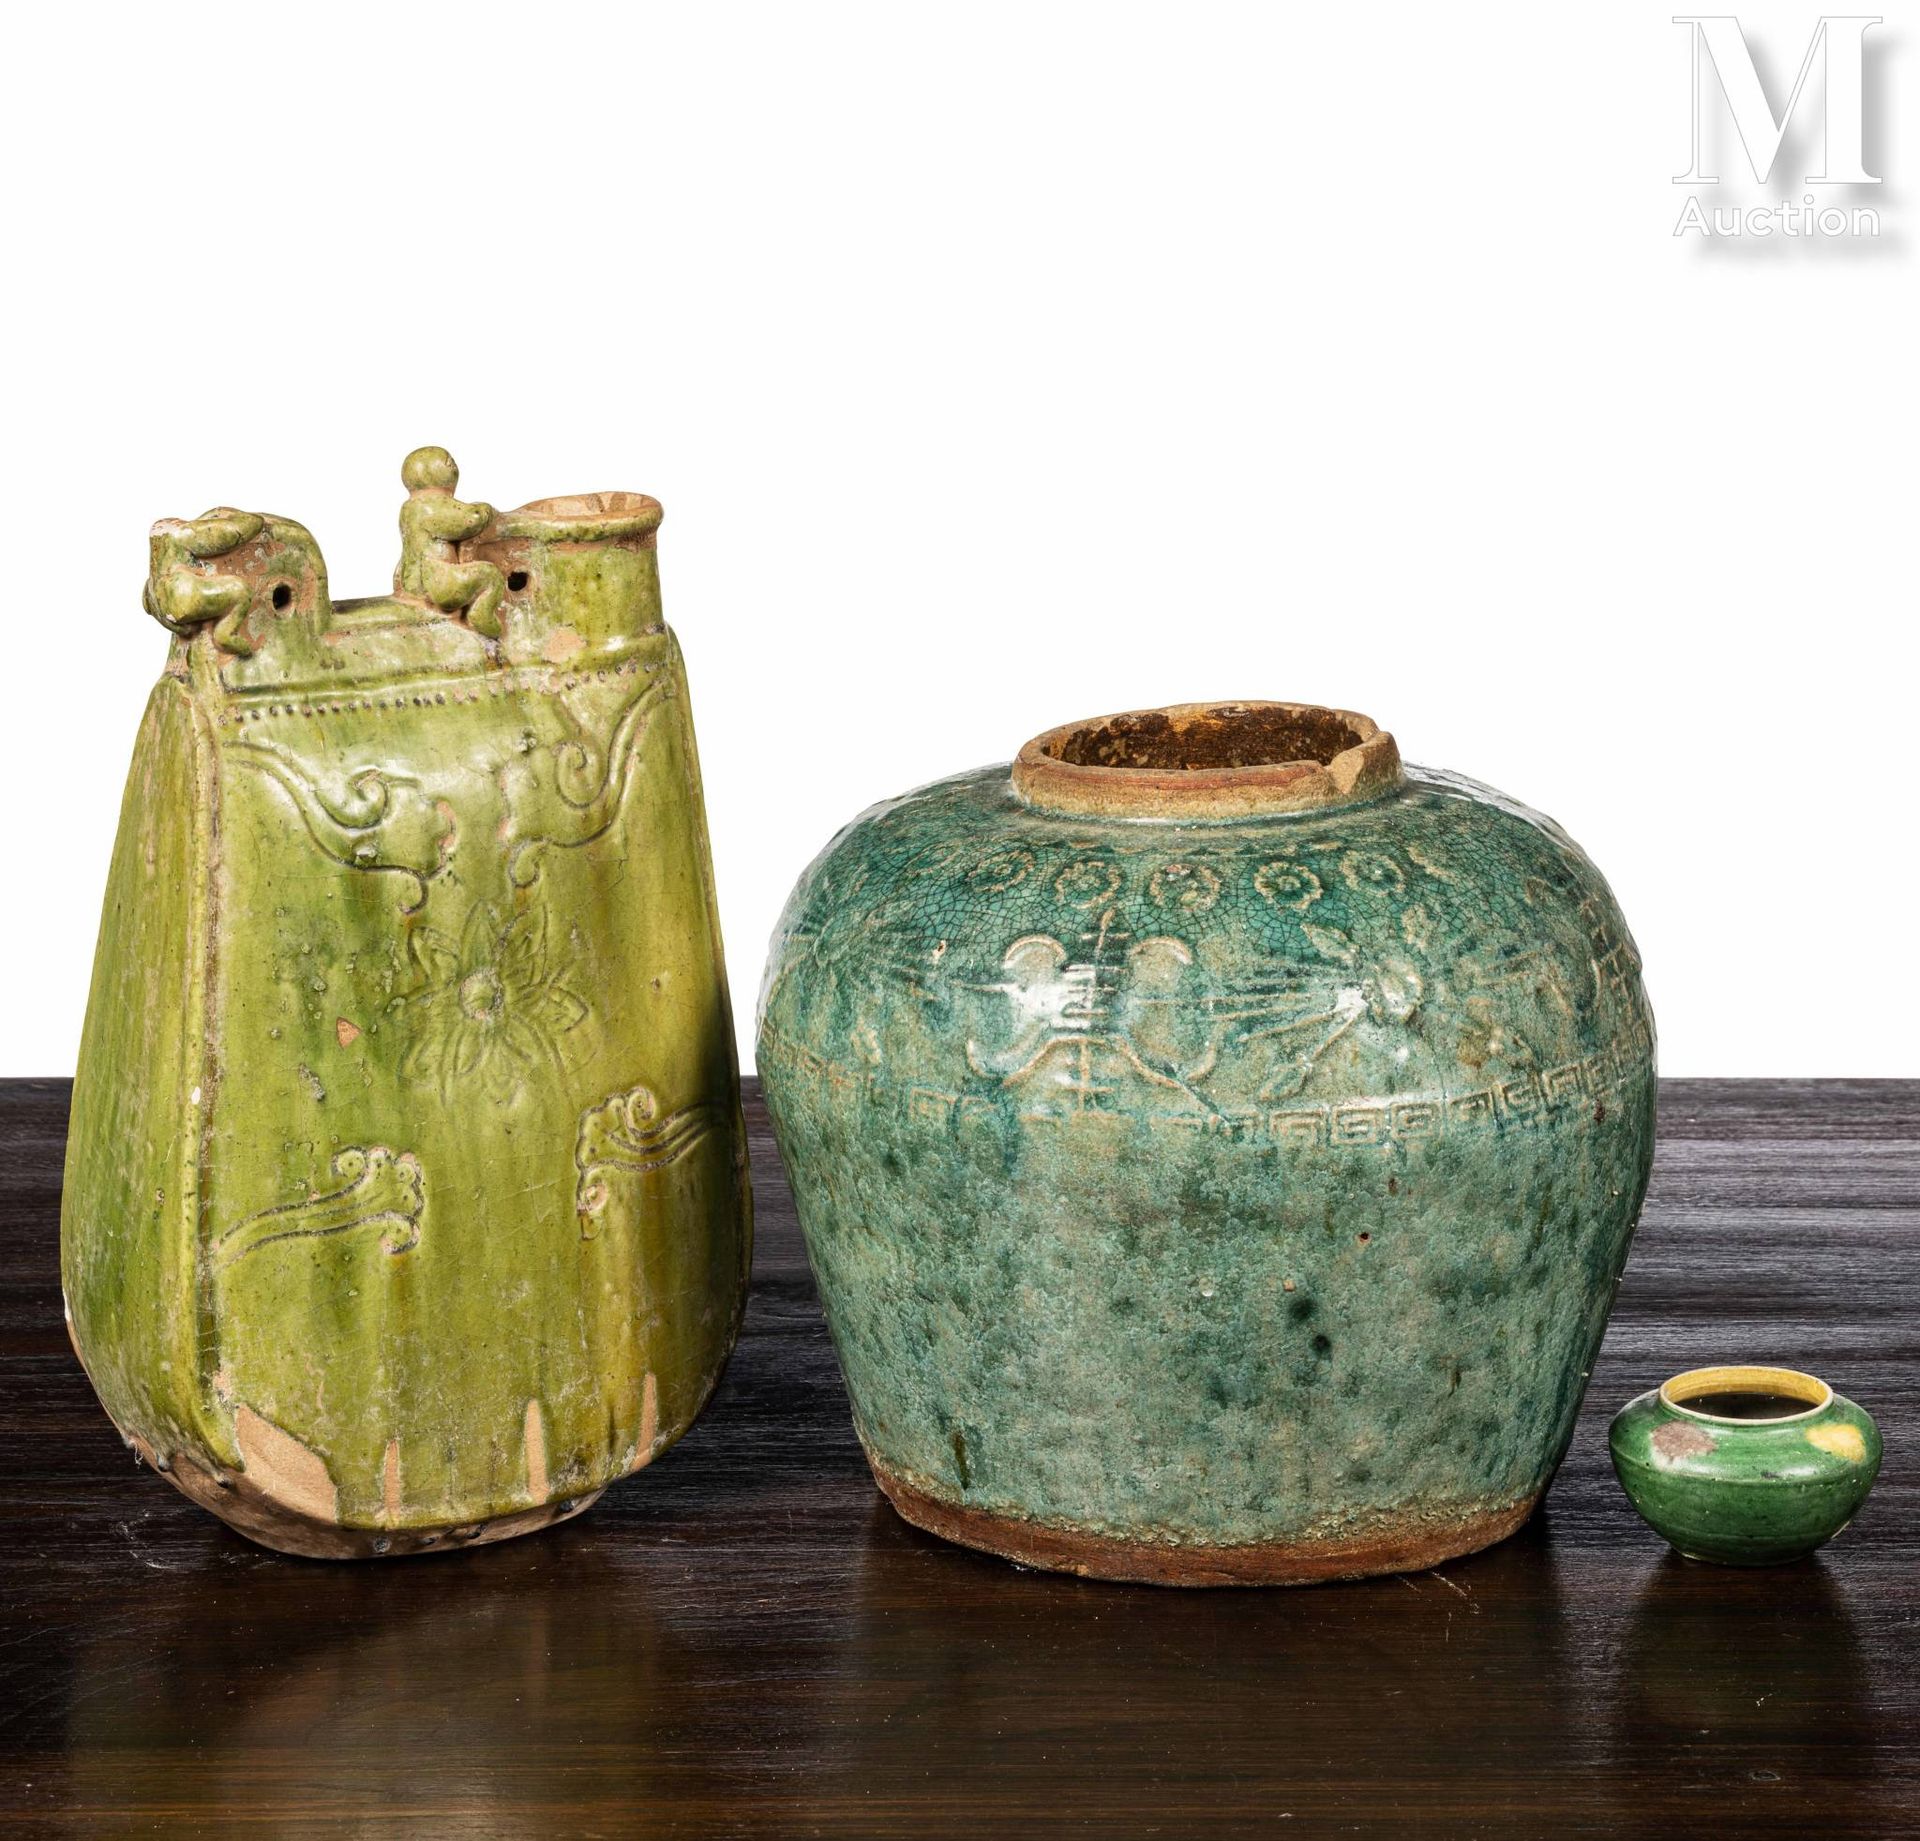 CHINE 一套三件陶器，包括瑶族风格的绿釉葫芦，绿松石釉的圆顶瓶，三彩釉的水壶。

高度：5、23和27厘米

错过了对葫芦，穿。